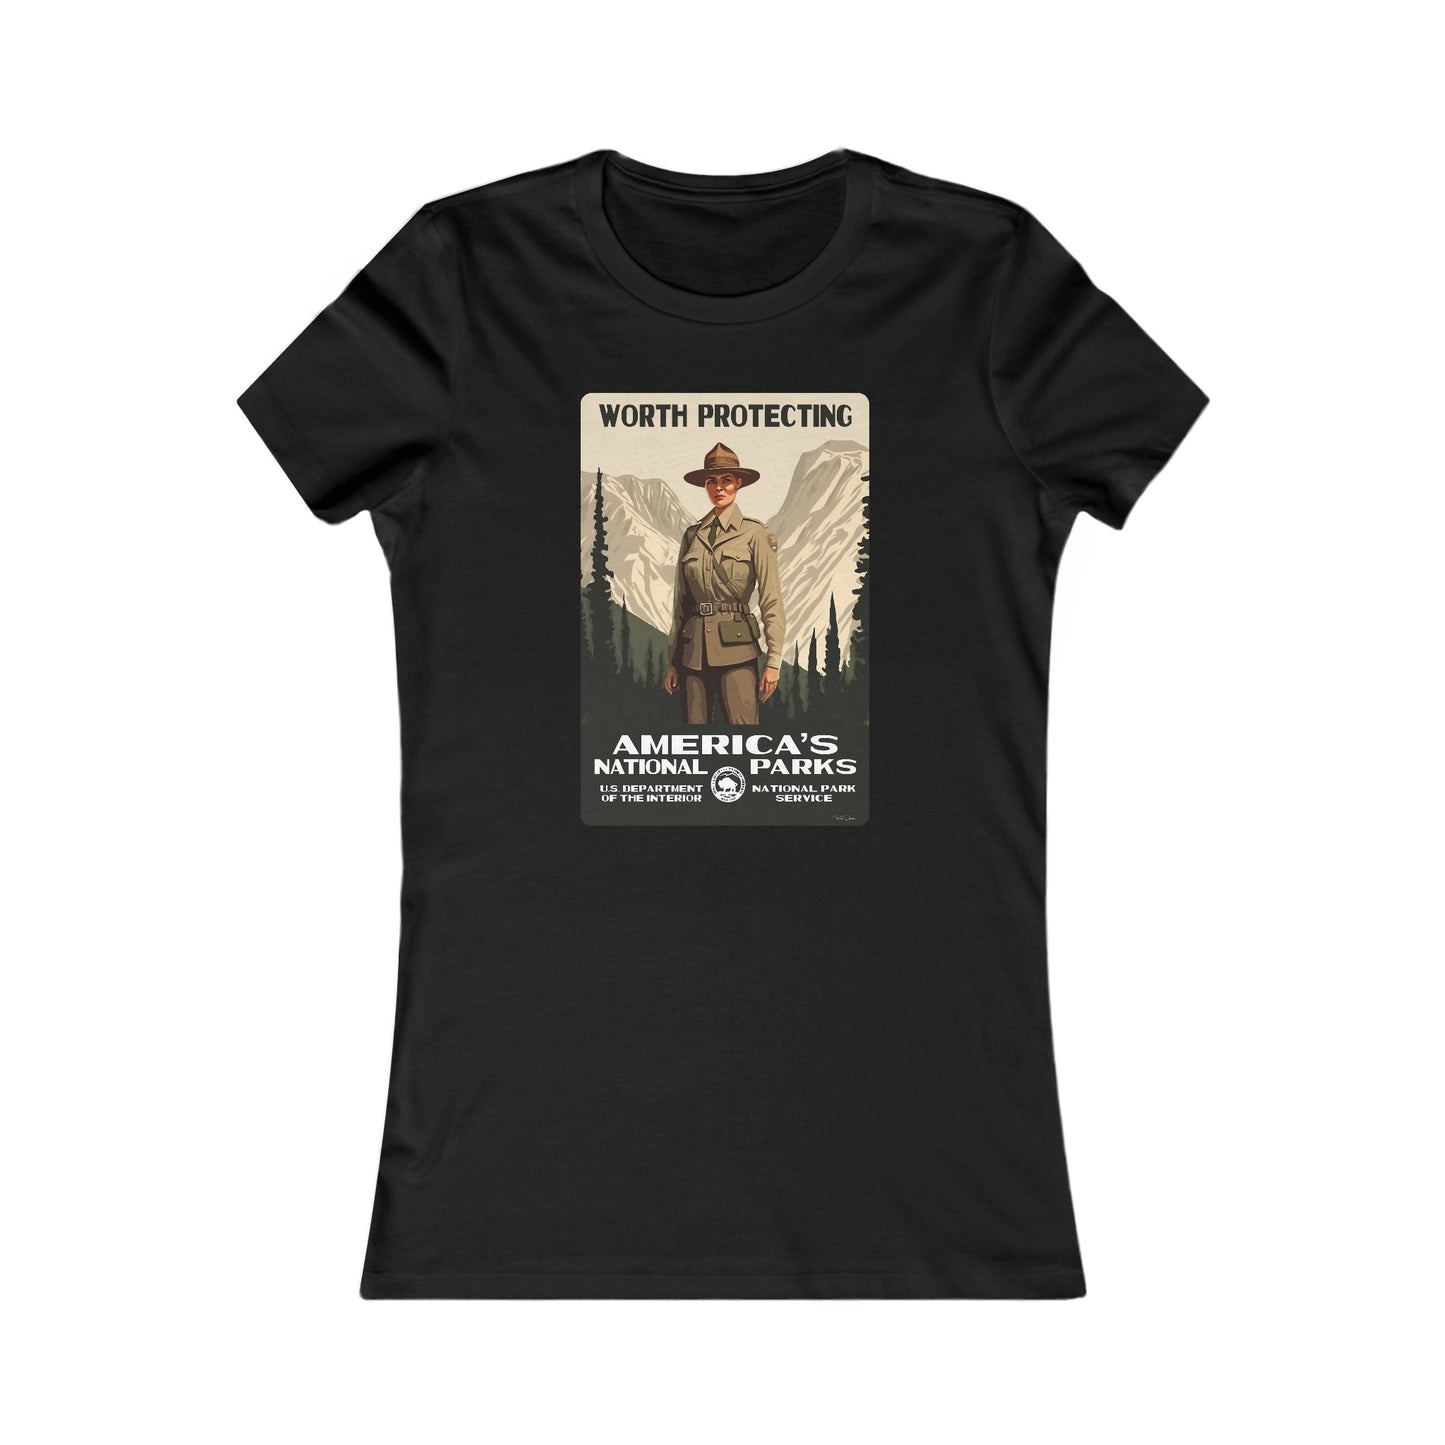 America's National Parks - Worth Protecting (Female Ranger) Women's T-Shirt